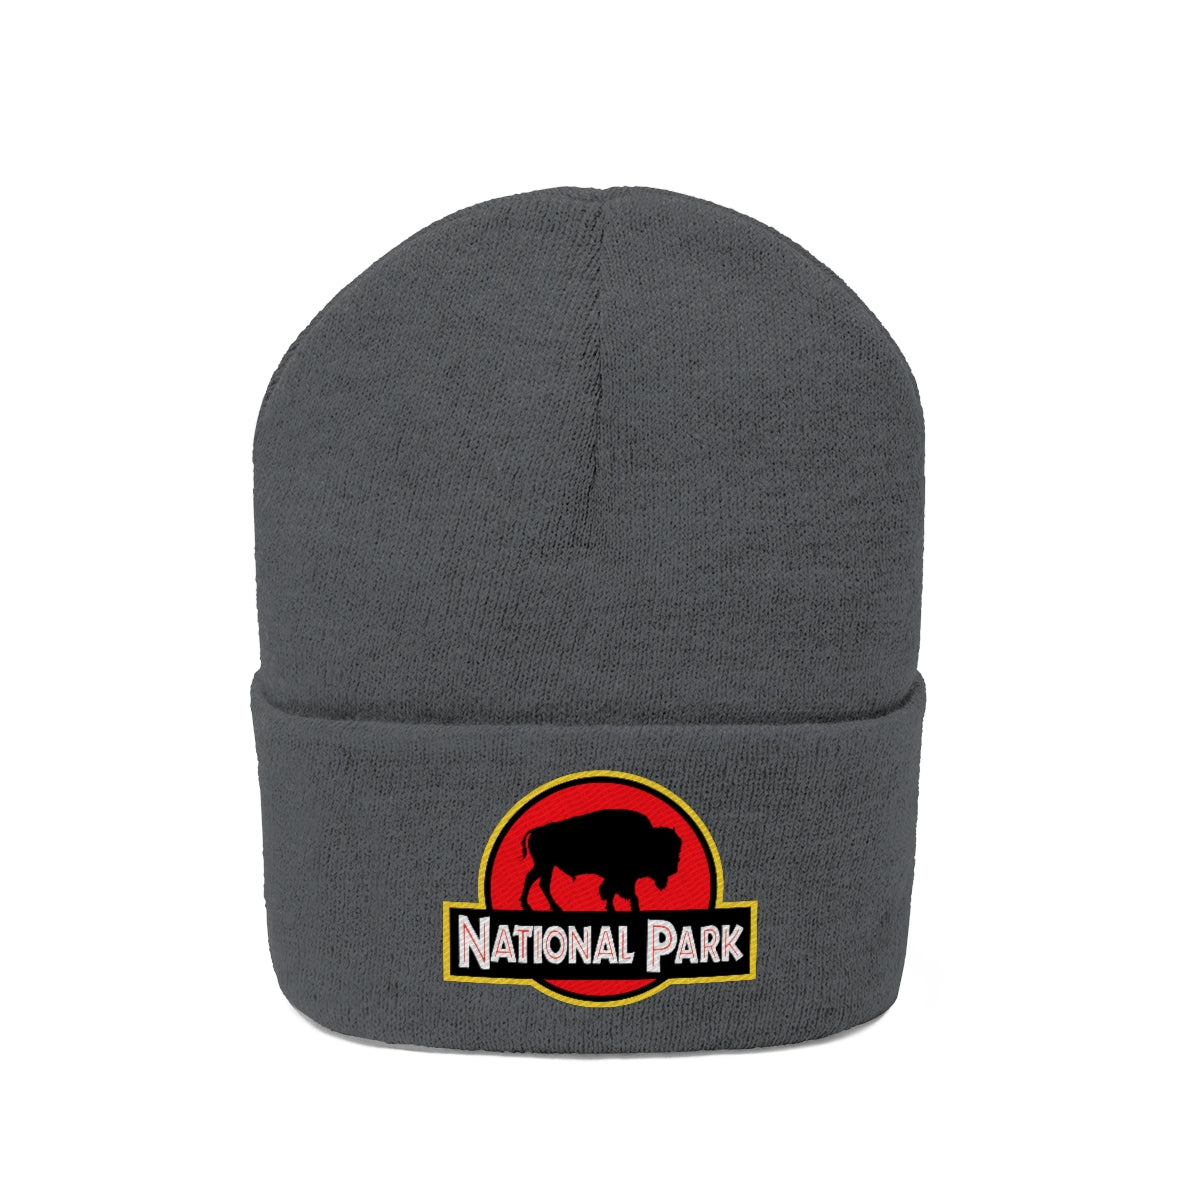 Bison National Park Hat - Knit Beanie Sewn Parody Logo